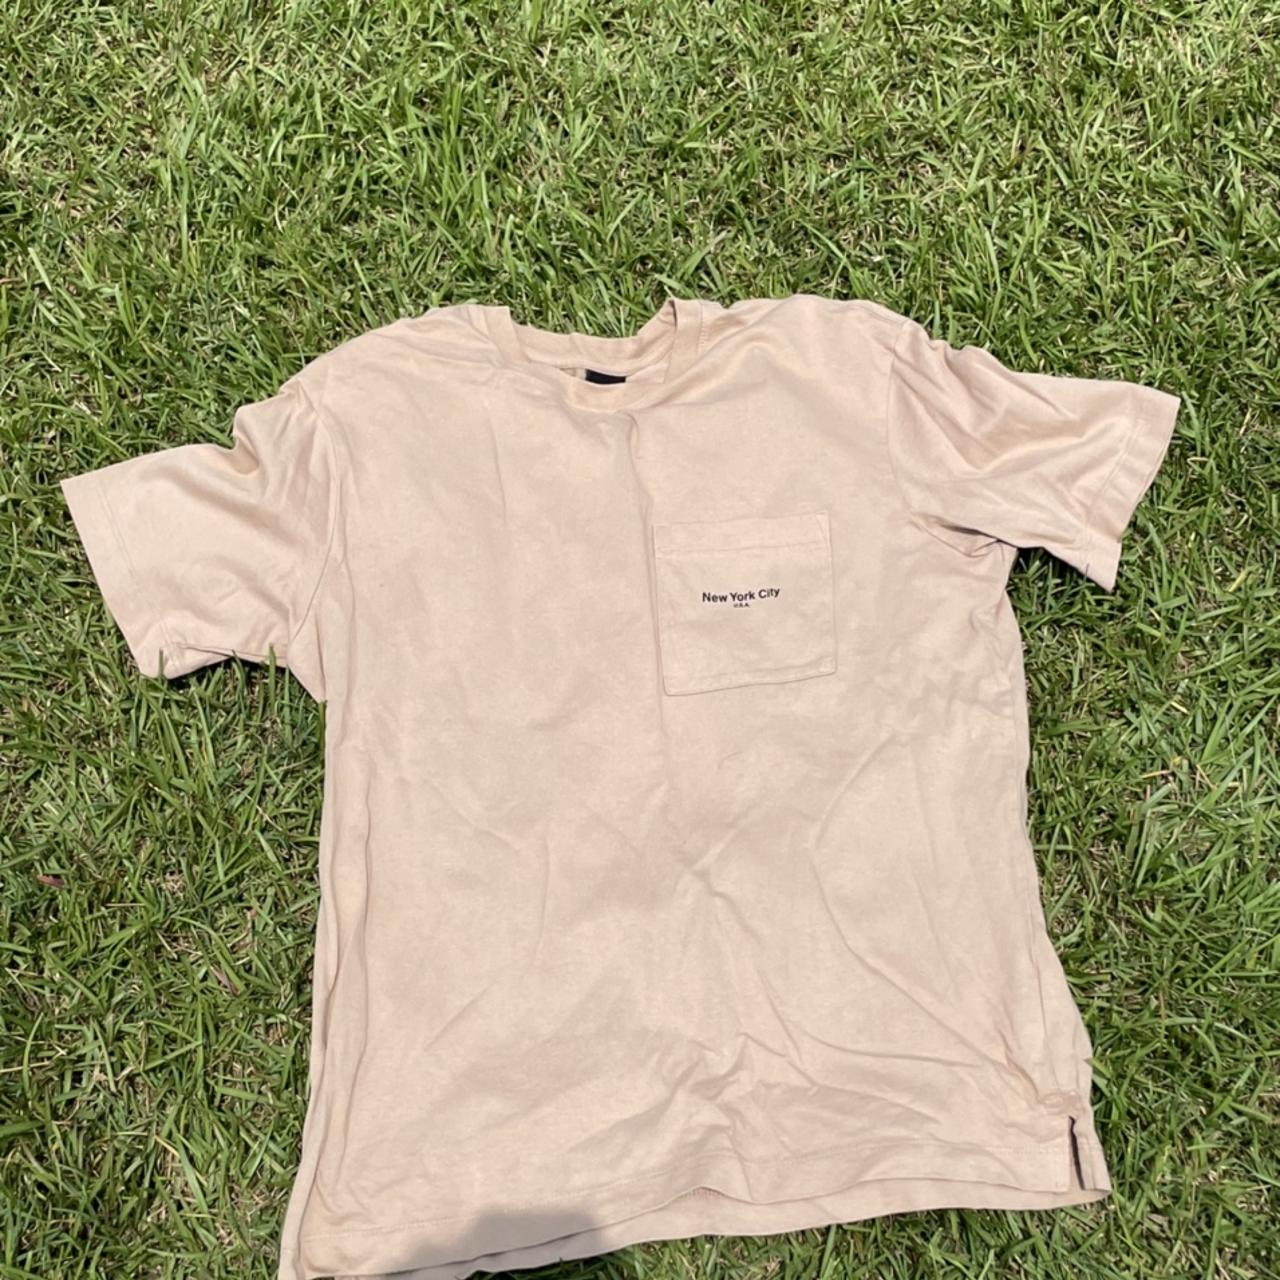 New York City h&m pocket tshirt! 🌵 size: adult - Depop